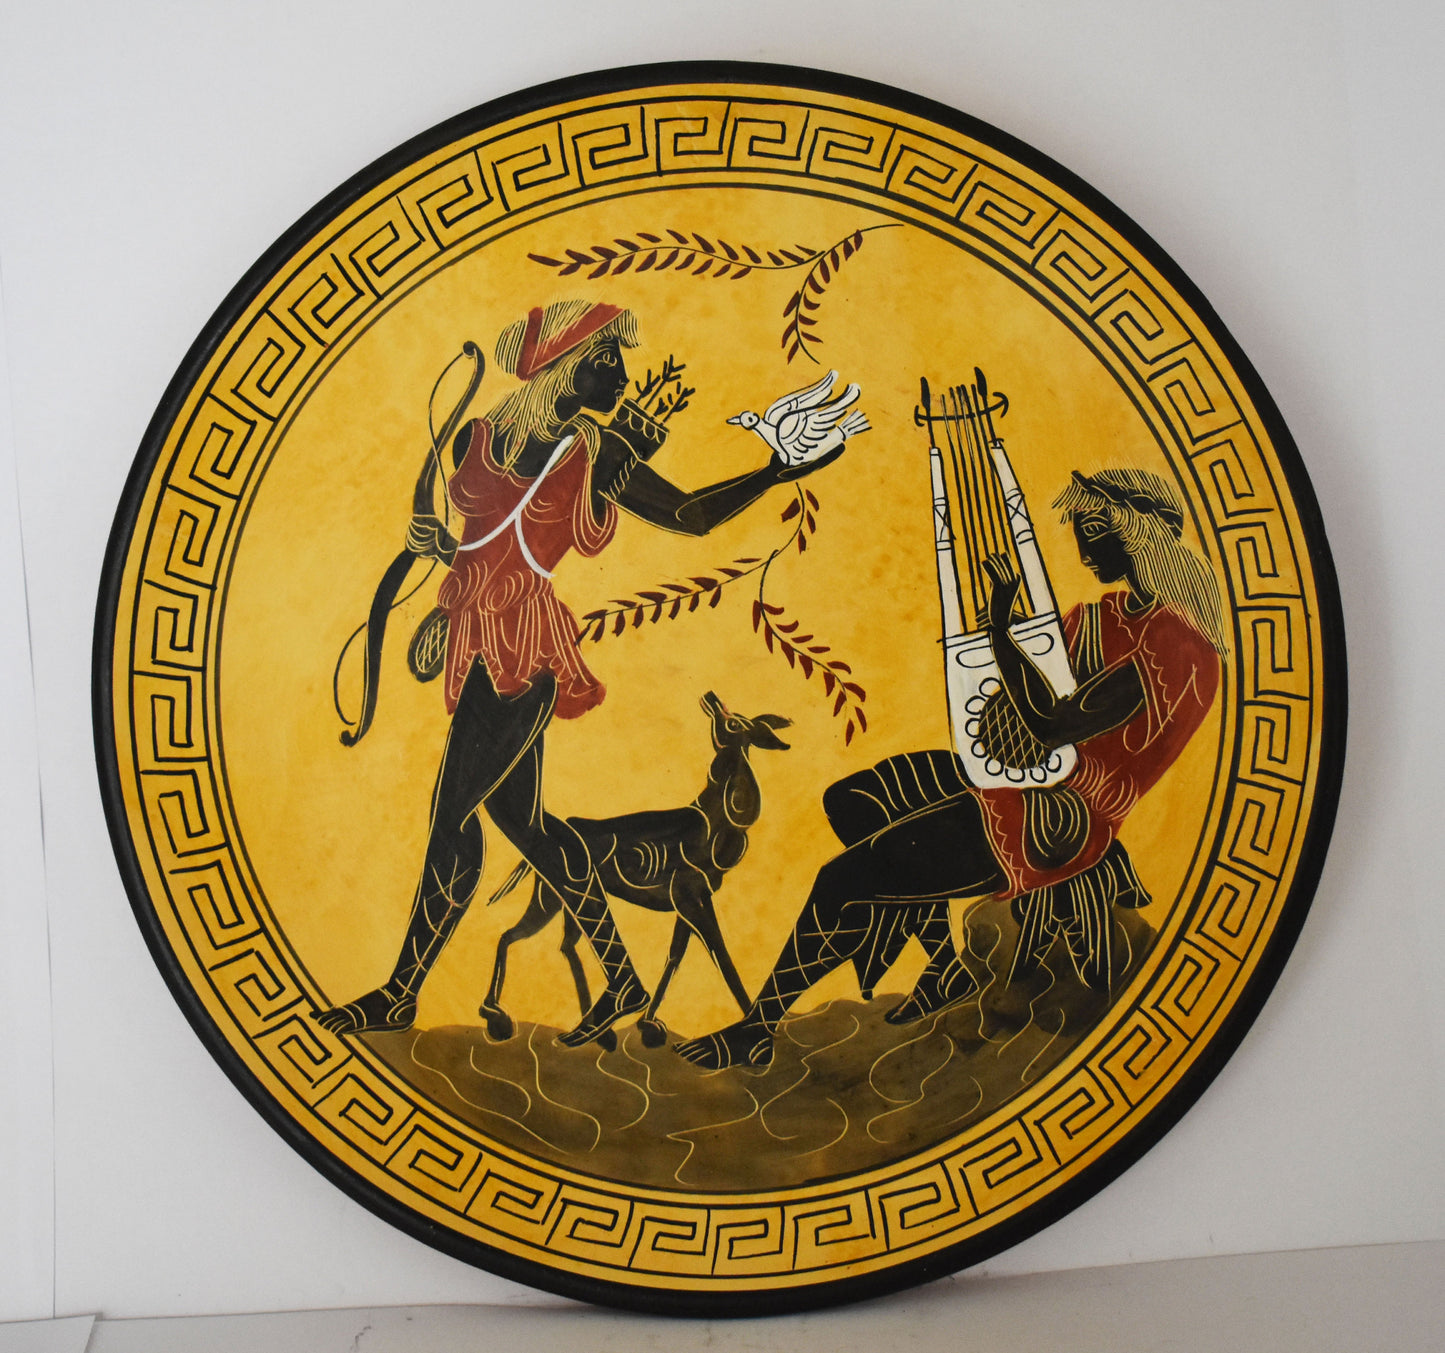 Artemis Diana and Apollo - Ancient Greek Roman Gods - Ceramic plate - Meander design - Handmade in Greece